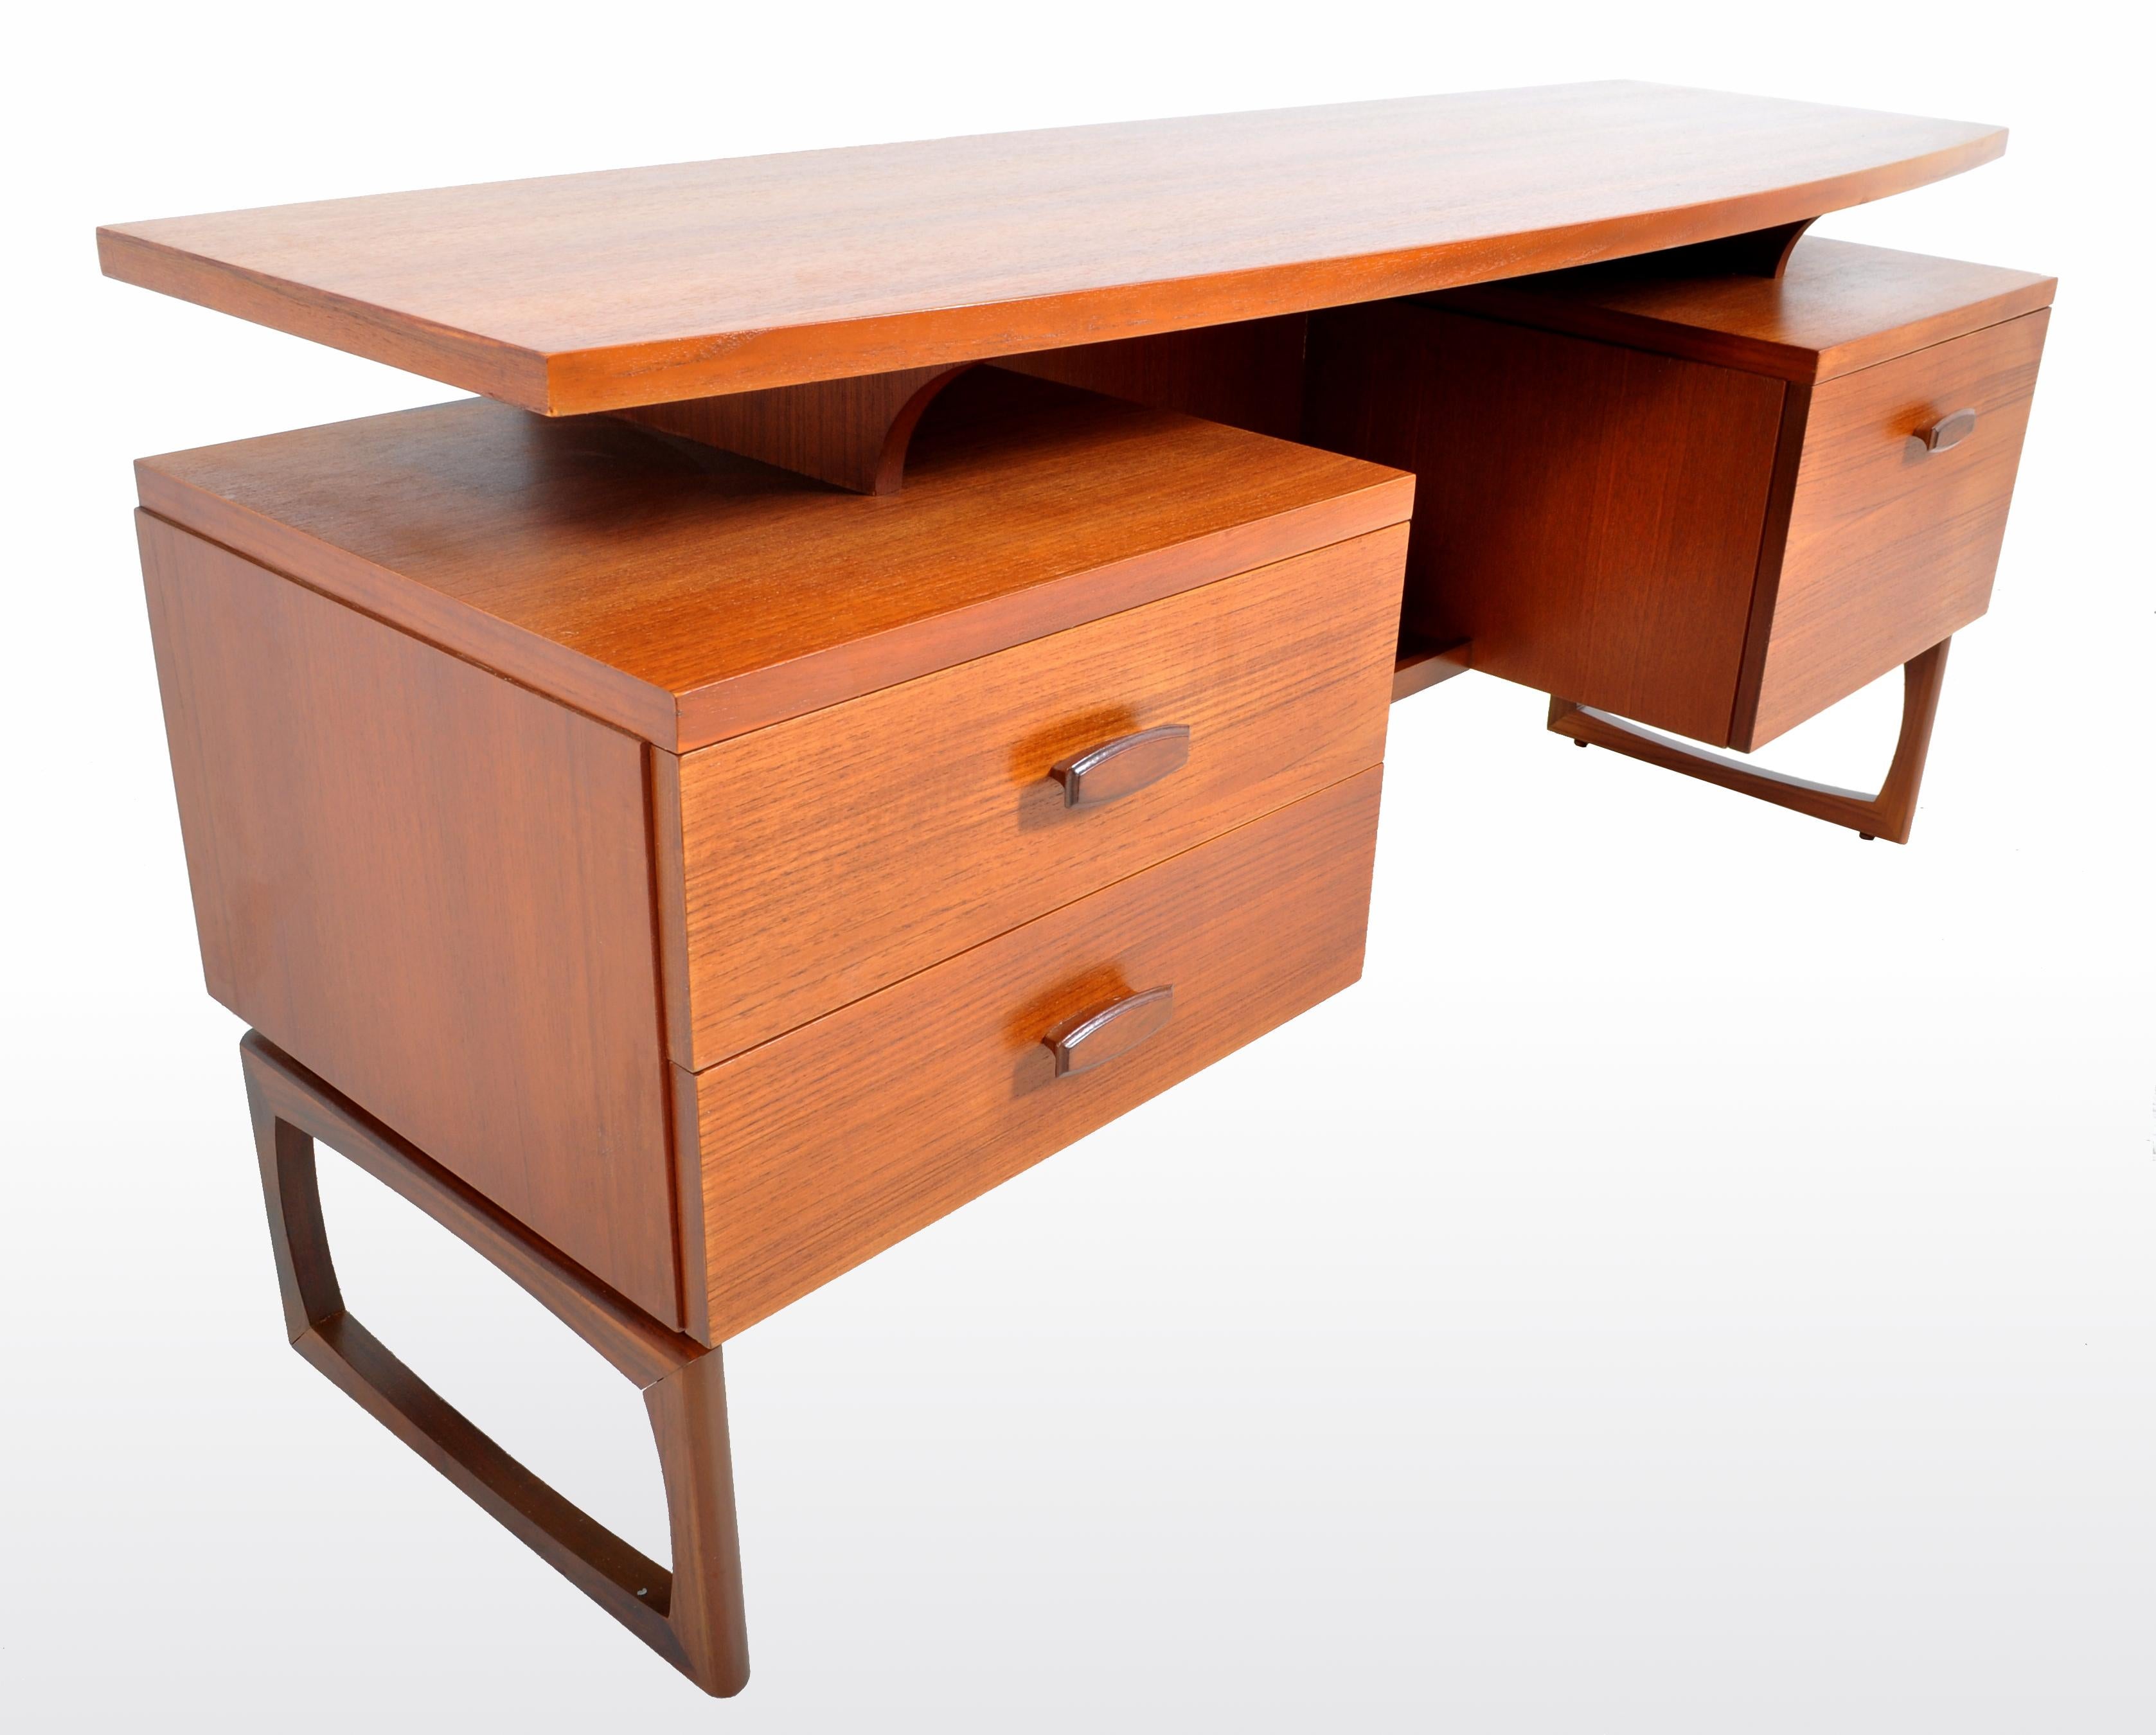 English Mid-Century Modern Danish Style Teak Desk by Ib Kofod-Larsen for G Plan, 1960s